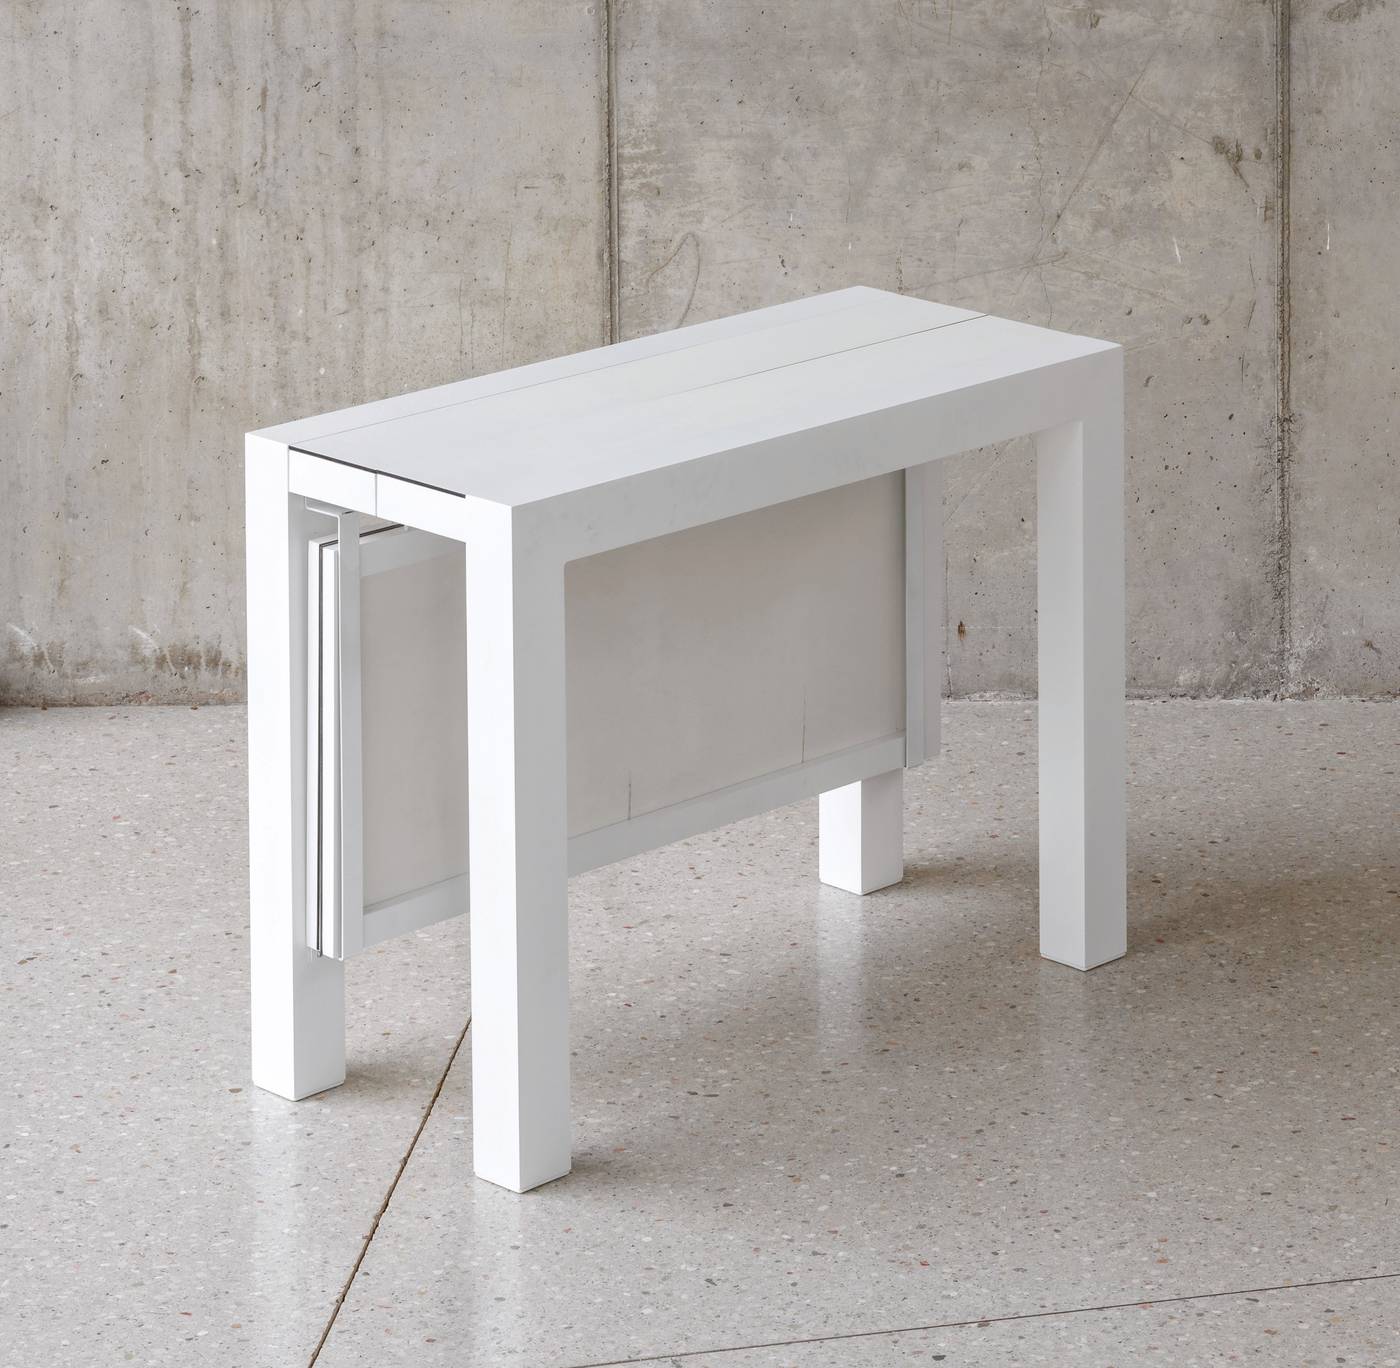 Set Aluminio LimaExt-Córcega 150-4 - Conjunto de aluminio: mesa extensible con tablero HPL + 4 sillones de textilen. Disponible en color blanco o antracita.